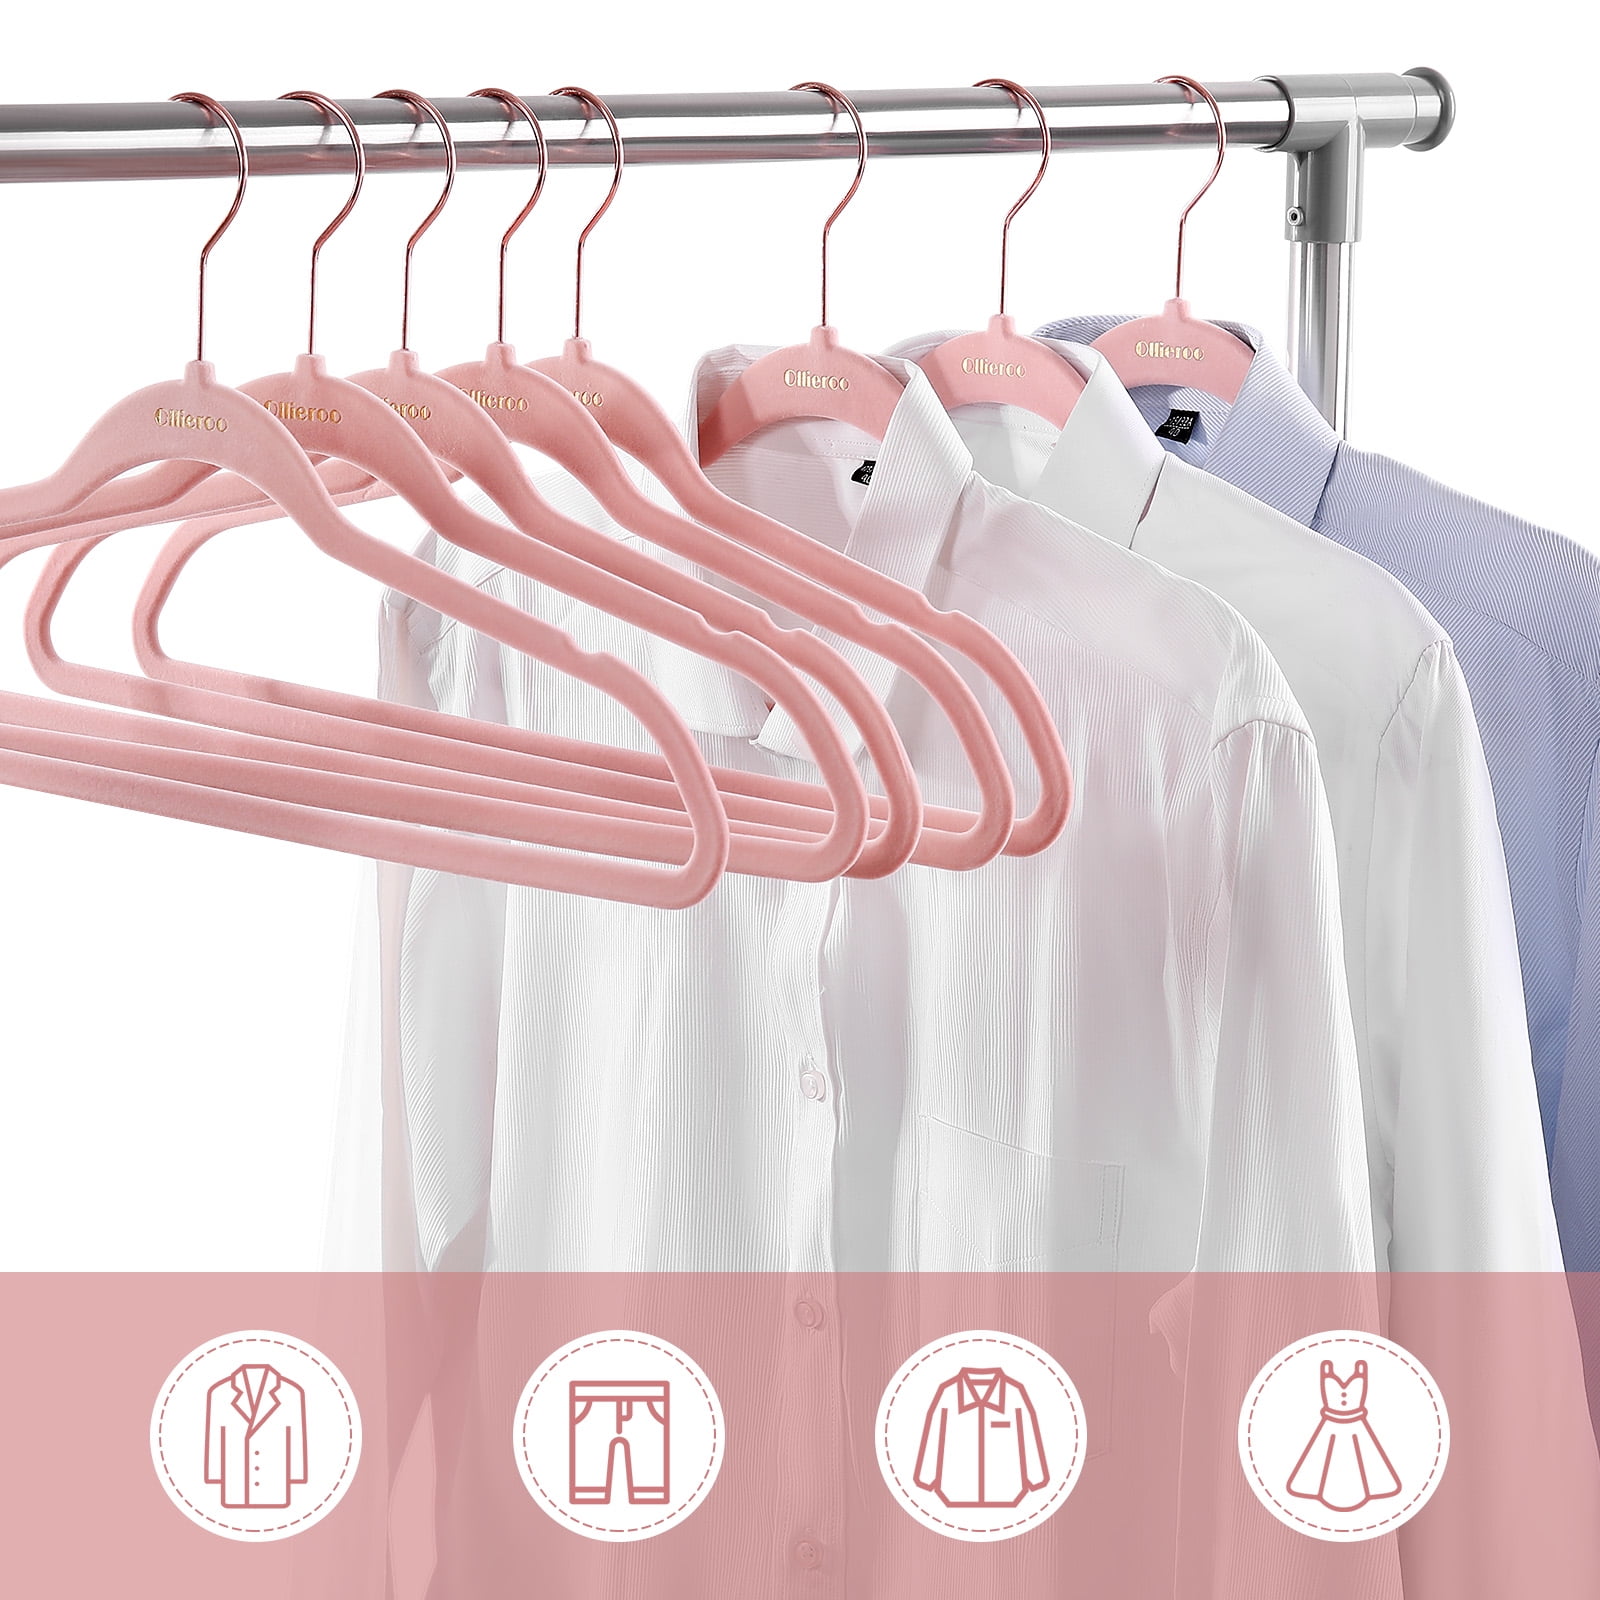 Ollieroo 50 Pack Velvet Clothes Hangers, Non-Slip Hangers with Swivel  Hooks, Heavy Duty Suit Hangers, Grey 